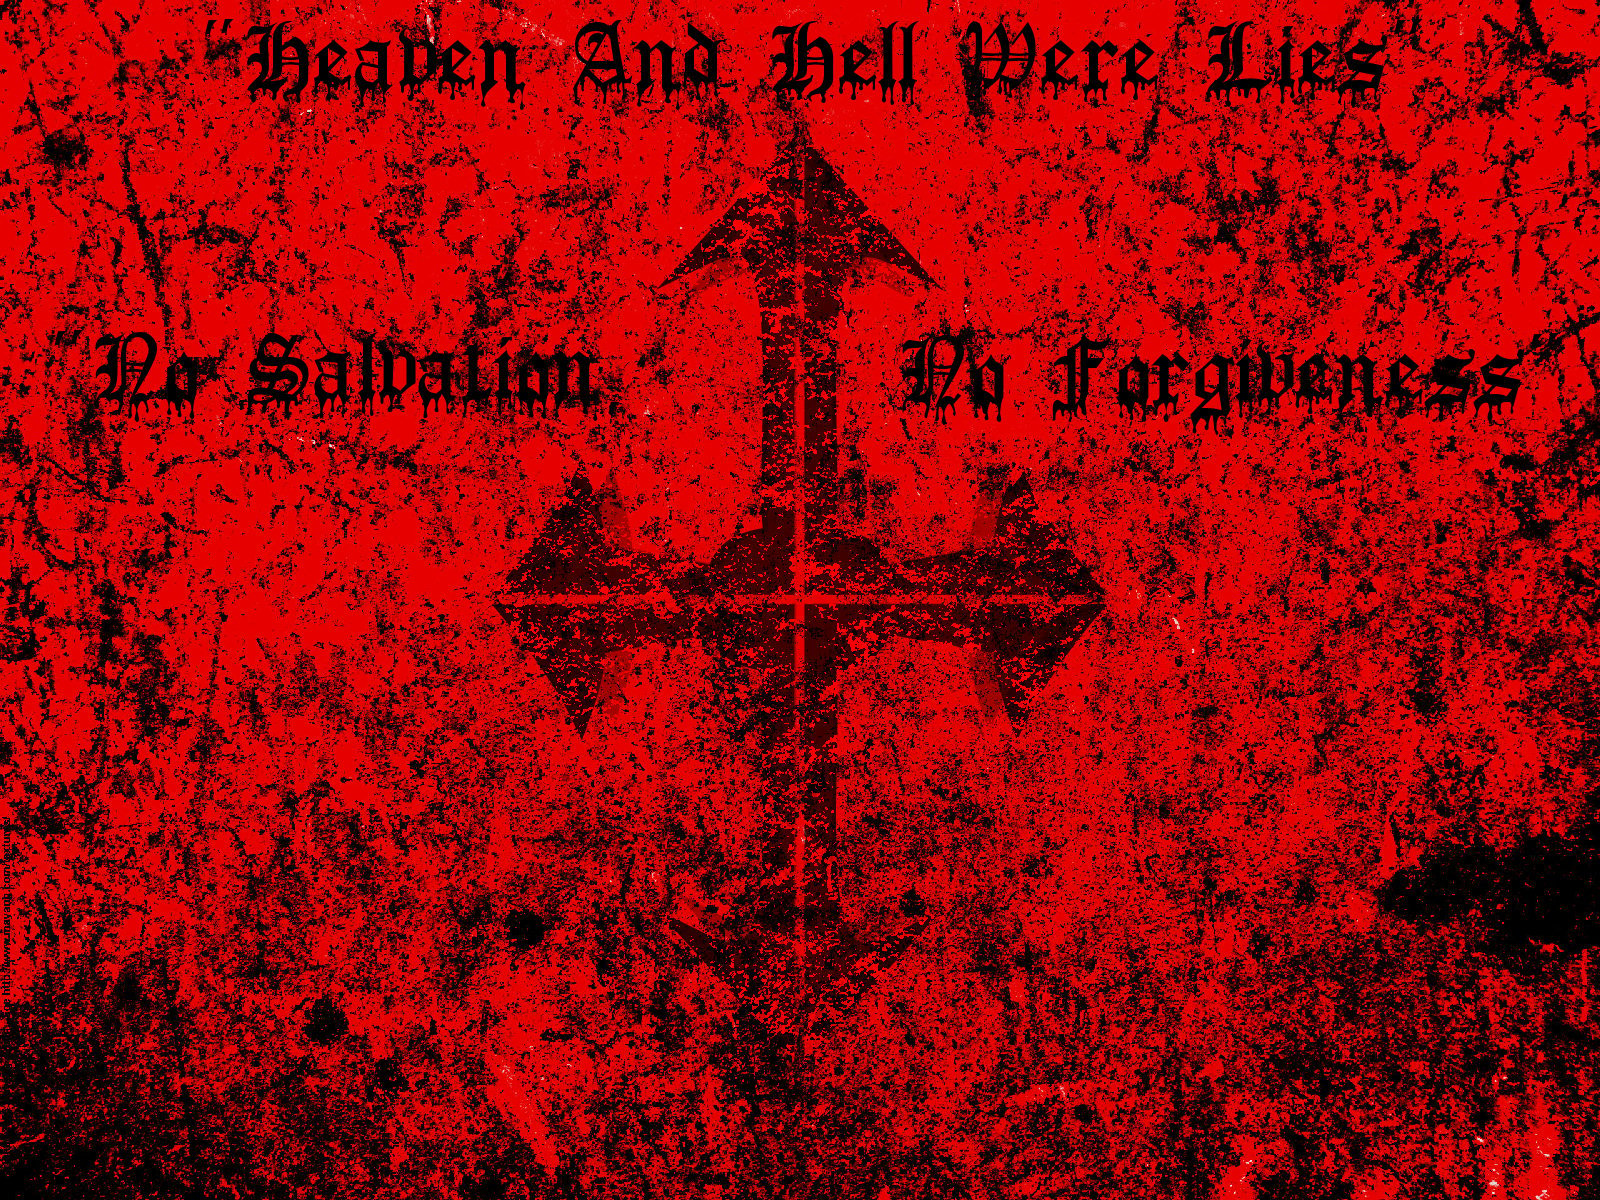 MARILYN MANSON industrial metal rock heavy shock gothic glam dark hell evil satan satanic f wallpaperx1200